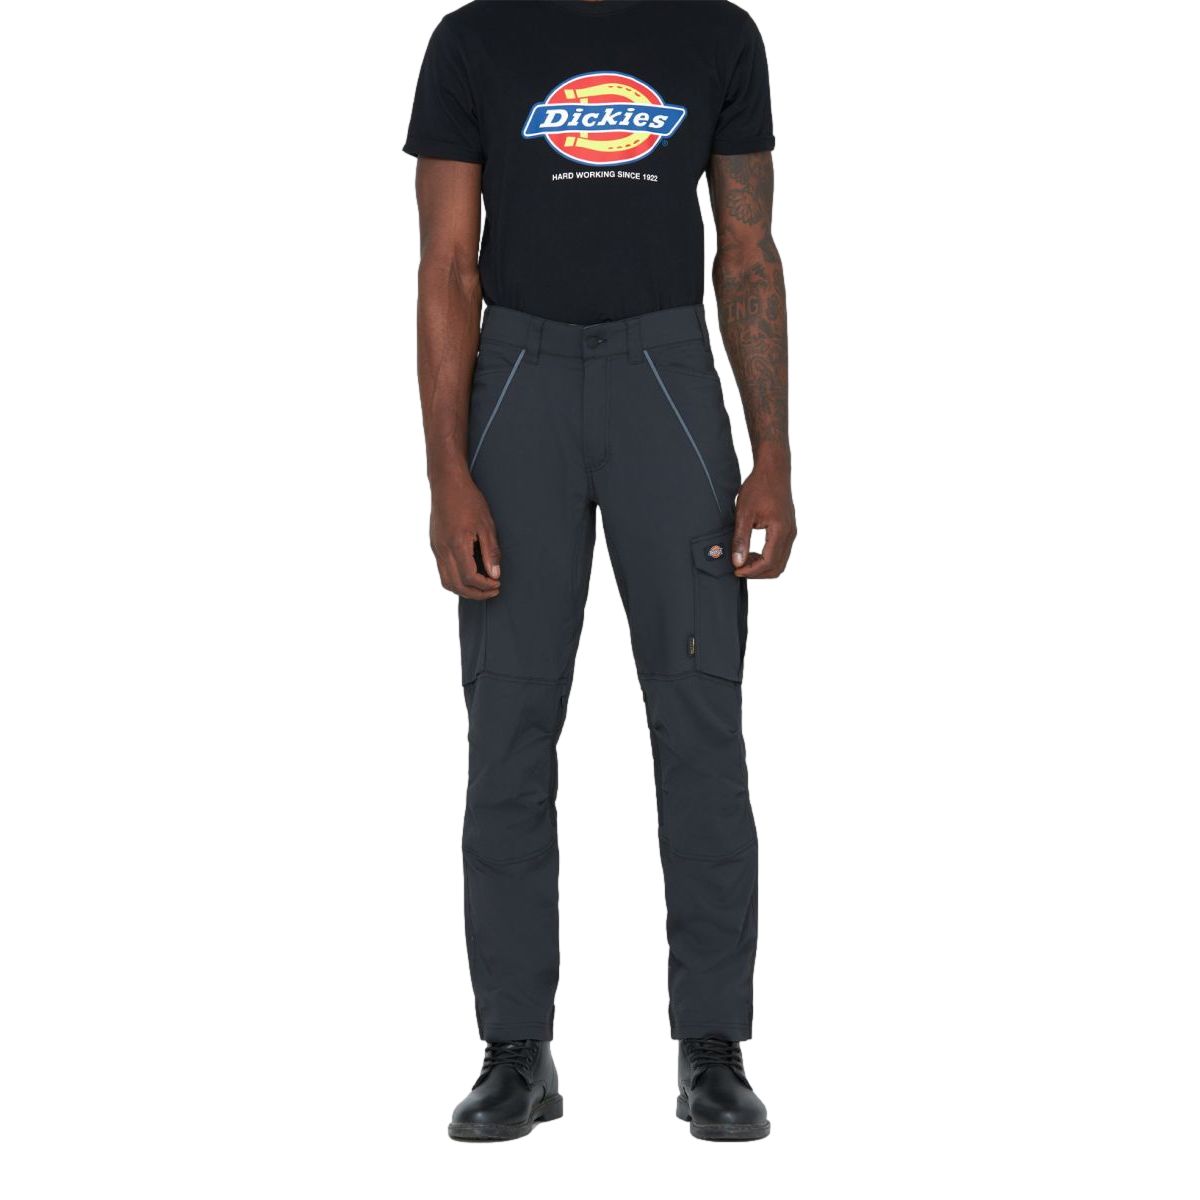 Pantalon léger Flex Noir - Dickies - Taille 40 2